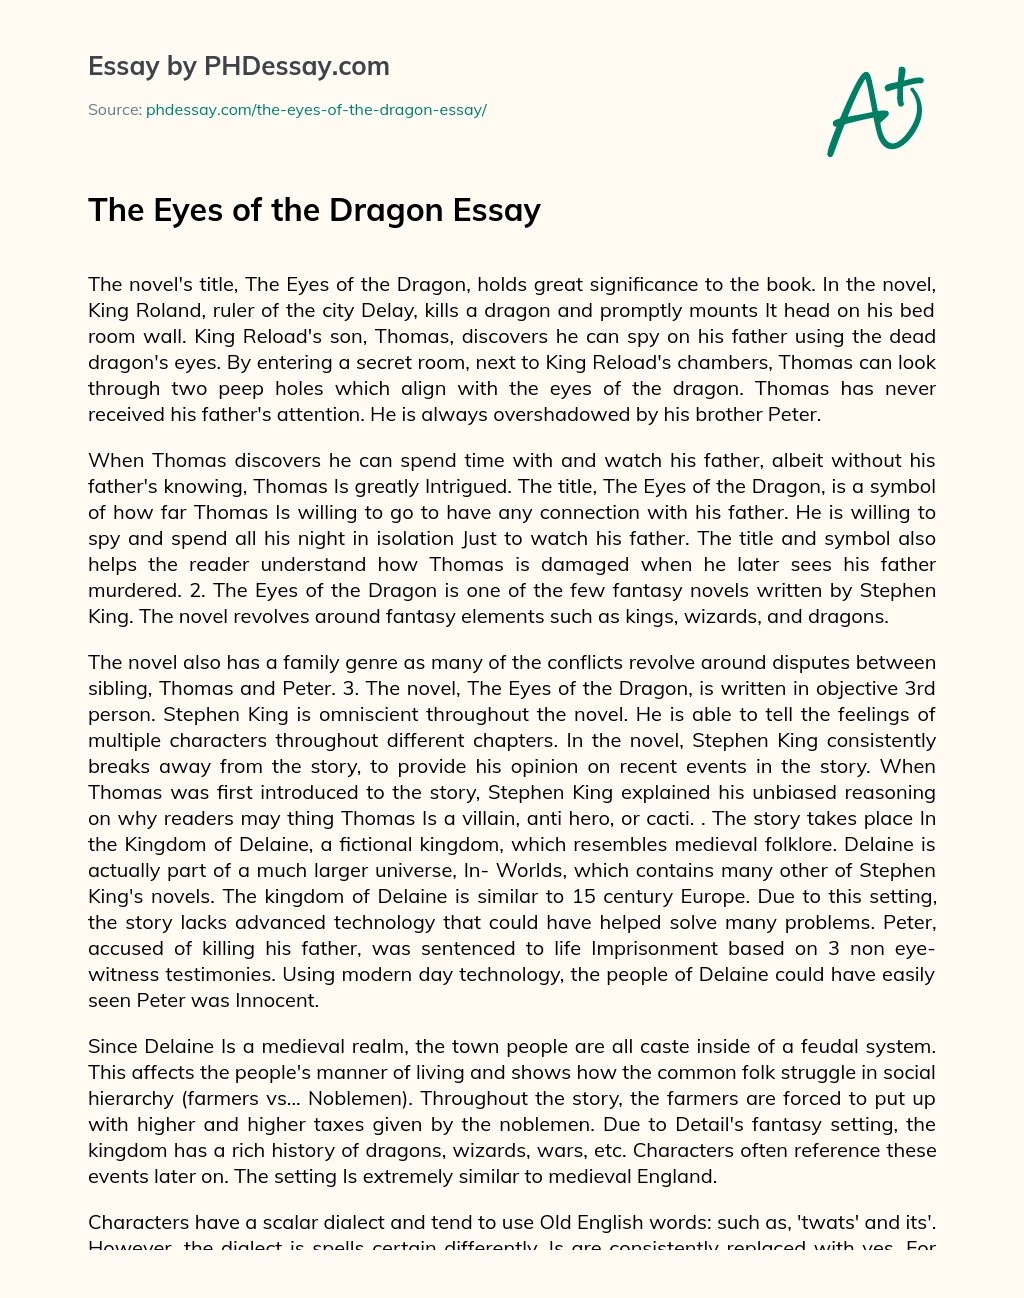 The Eyes of the Dragon Essay essay